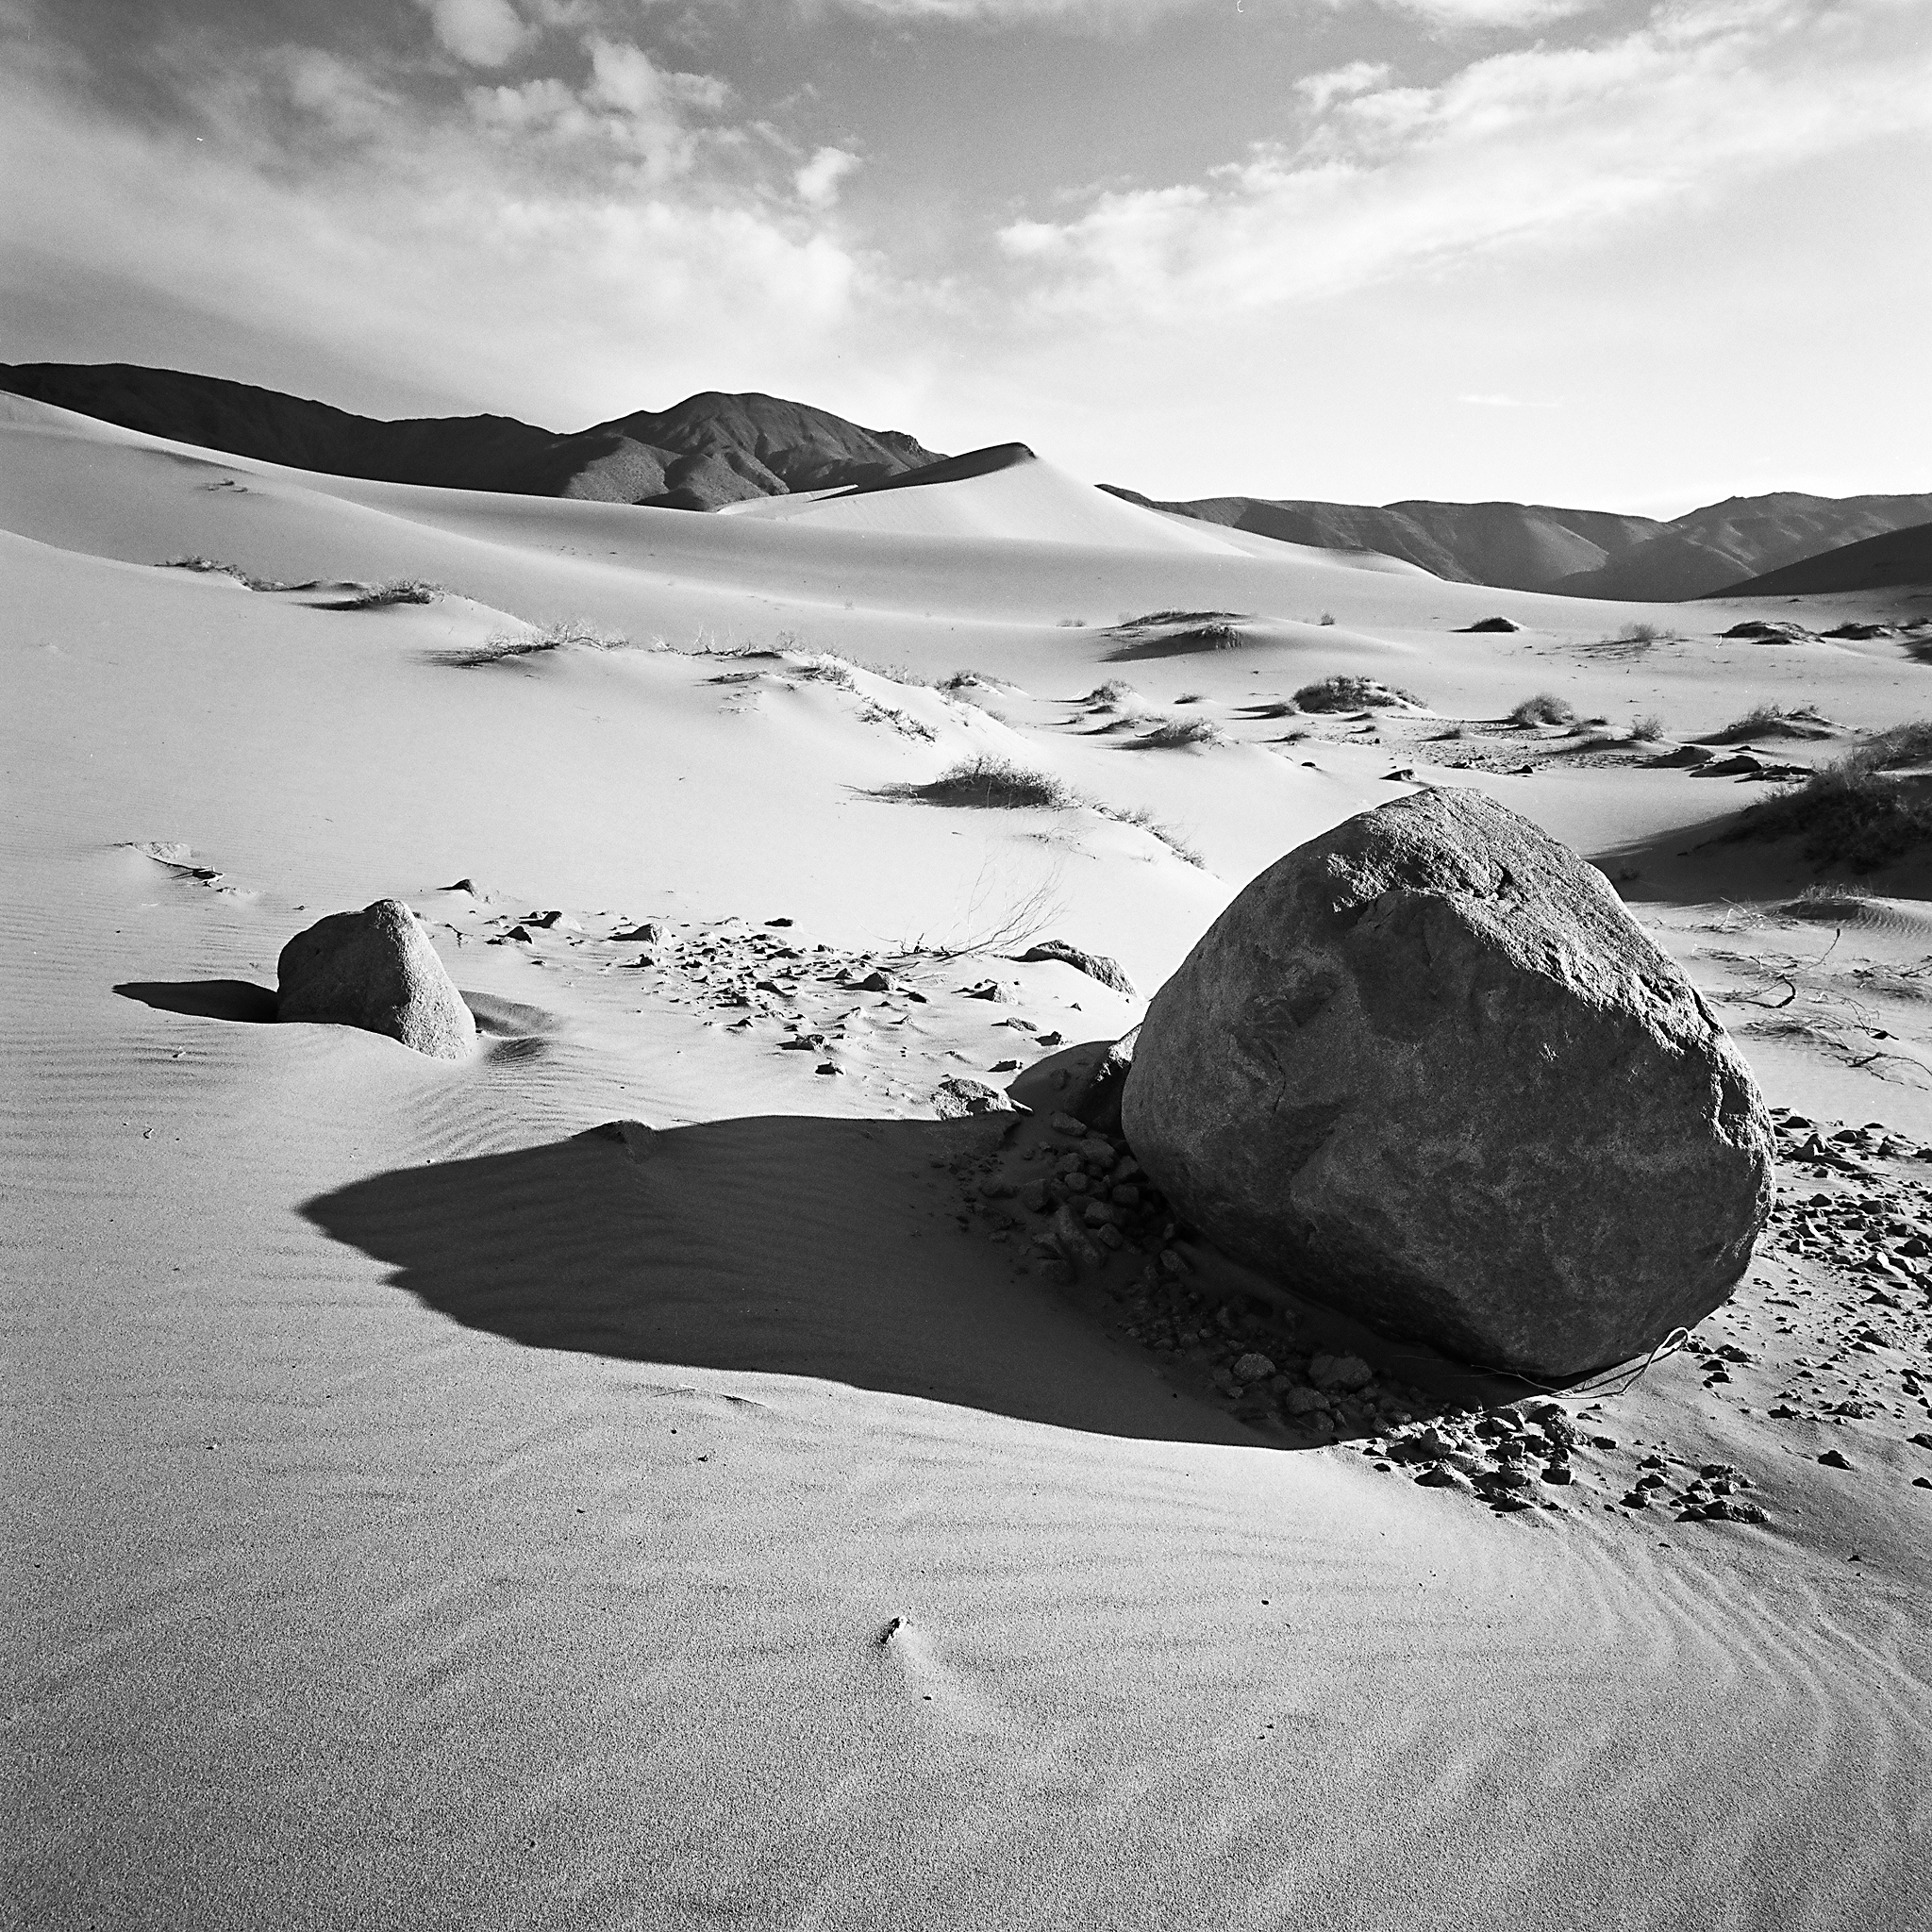  Panamint Dunes, Death Valley National Park, California © 2012.  Image: Hasselblad SWC + Zeiss Biogon 1:4.5/38mm. 